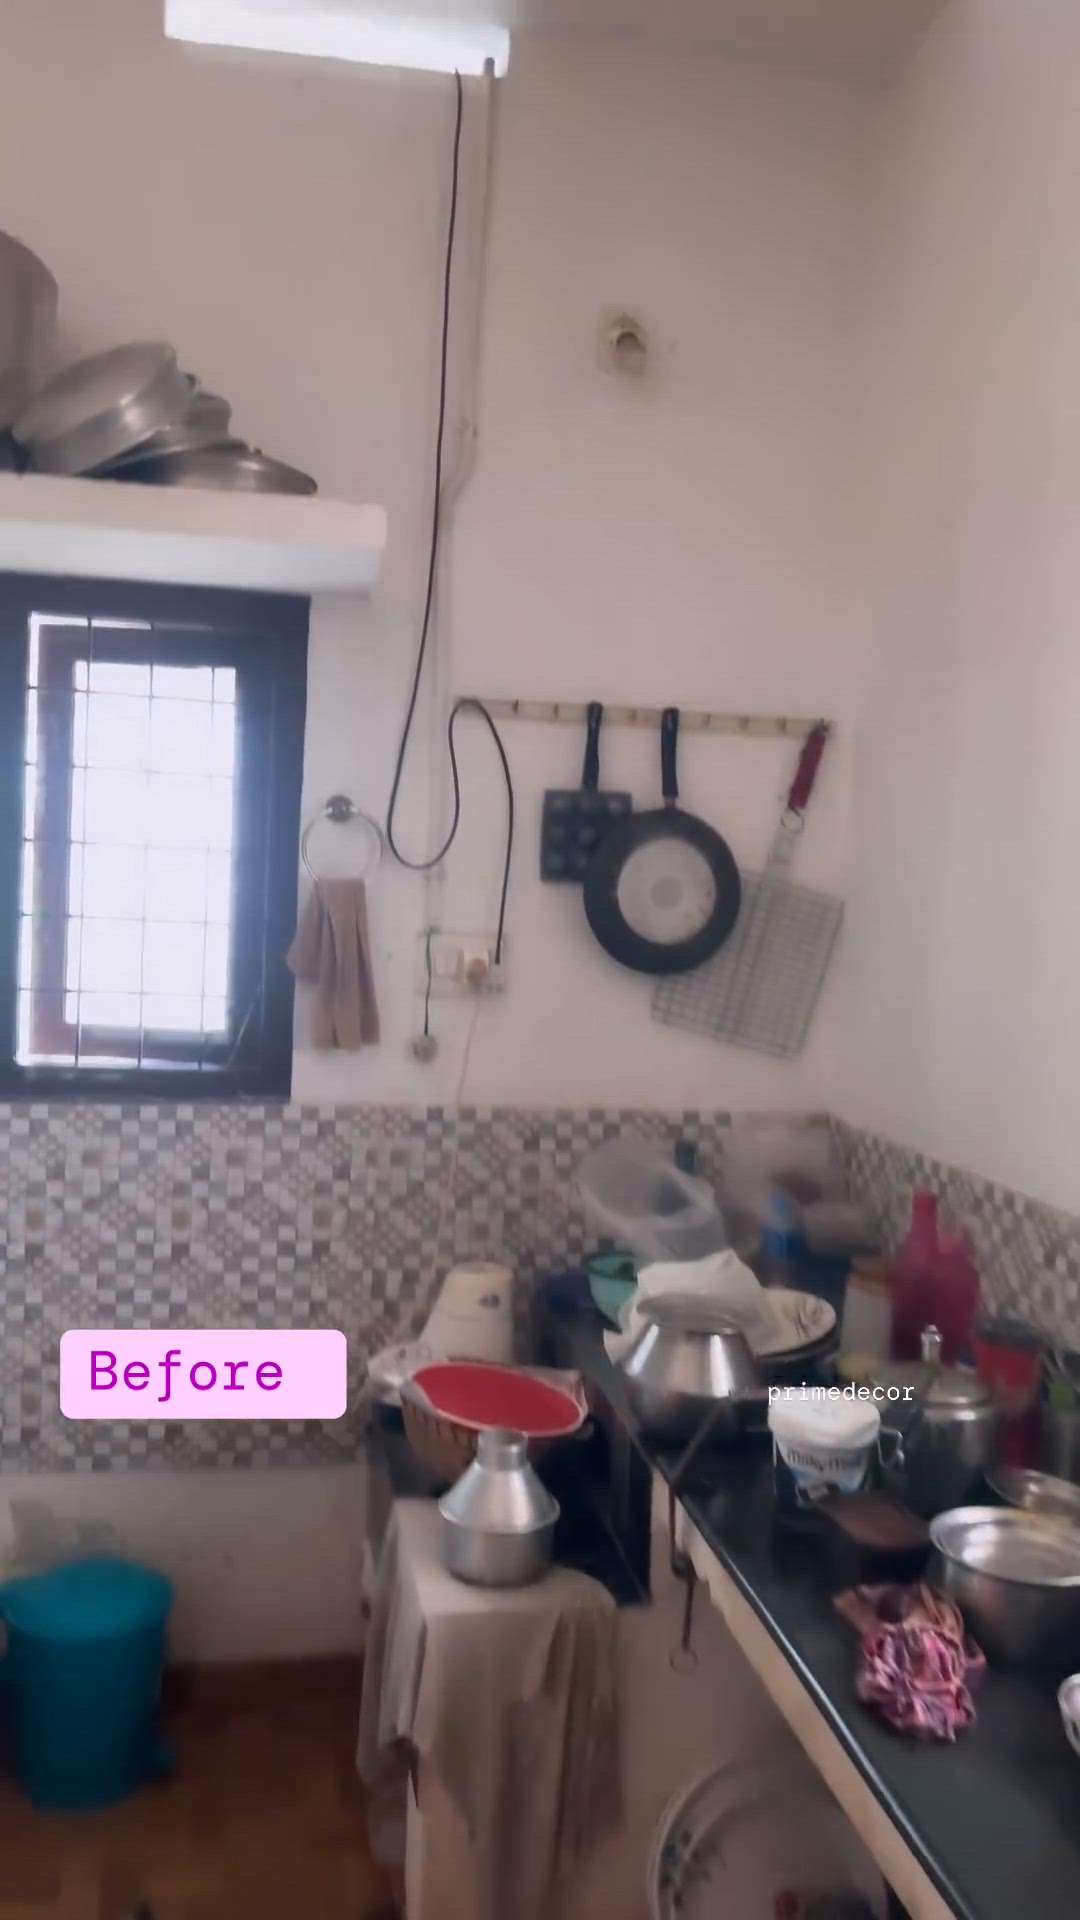 kitchen Makeover

#irinjalakuda #kerala #india #keralagram #love #photography #mallu #malayalam #instagram #kochi #keralagodsowncountry #instagood #malayali #keralatourism #godsowncountry #mallugram  #malappuram #kozhikode #mumbai #nature  #designerkitchen  #chennai #InteriorDesigner  #keralam #primedecorindia  #kannur #keralagallery #entekeralam #kitchen

follow for more updates 

if you have an interior enquiry let's call us for a free consultation